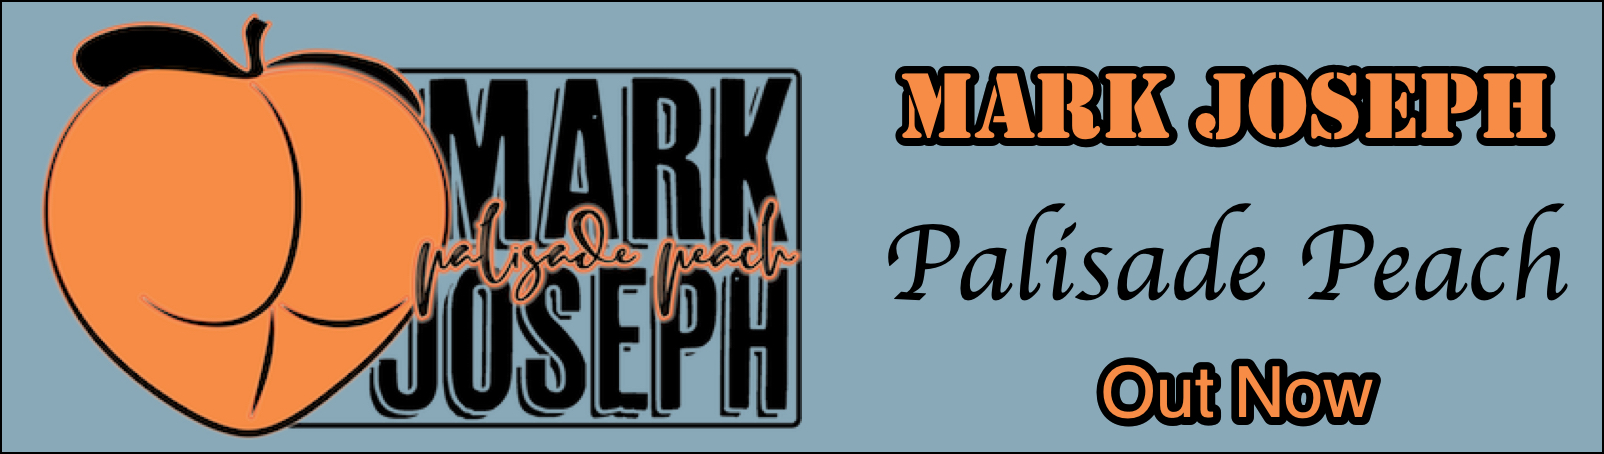 Advert - Mark Joseph Album - Palisade Peach